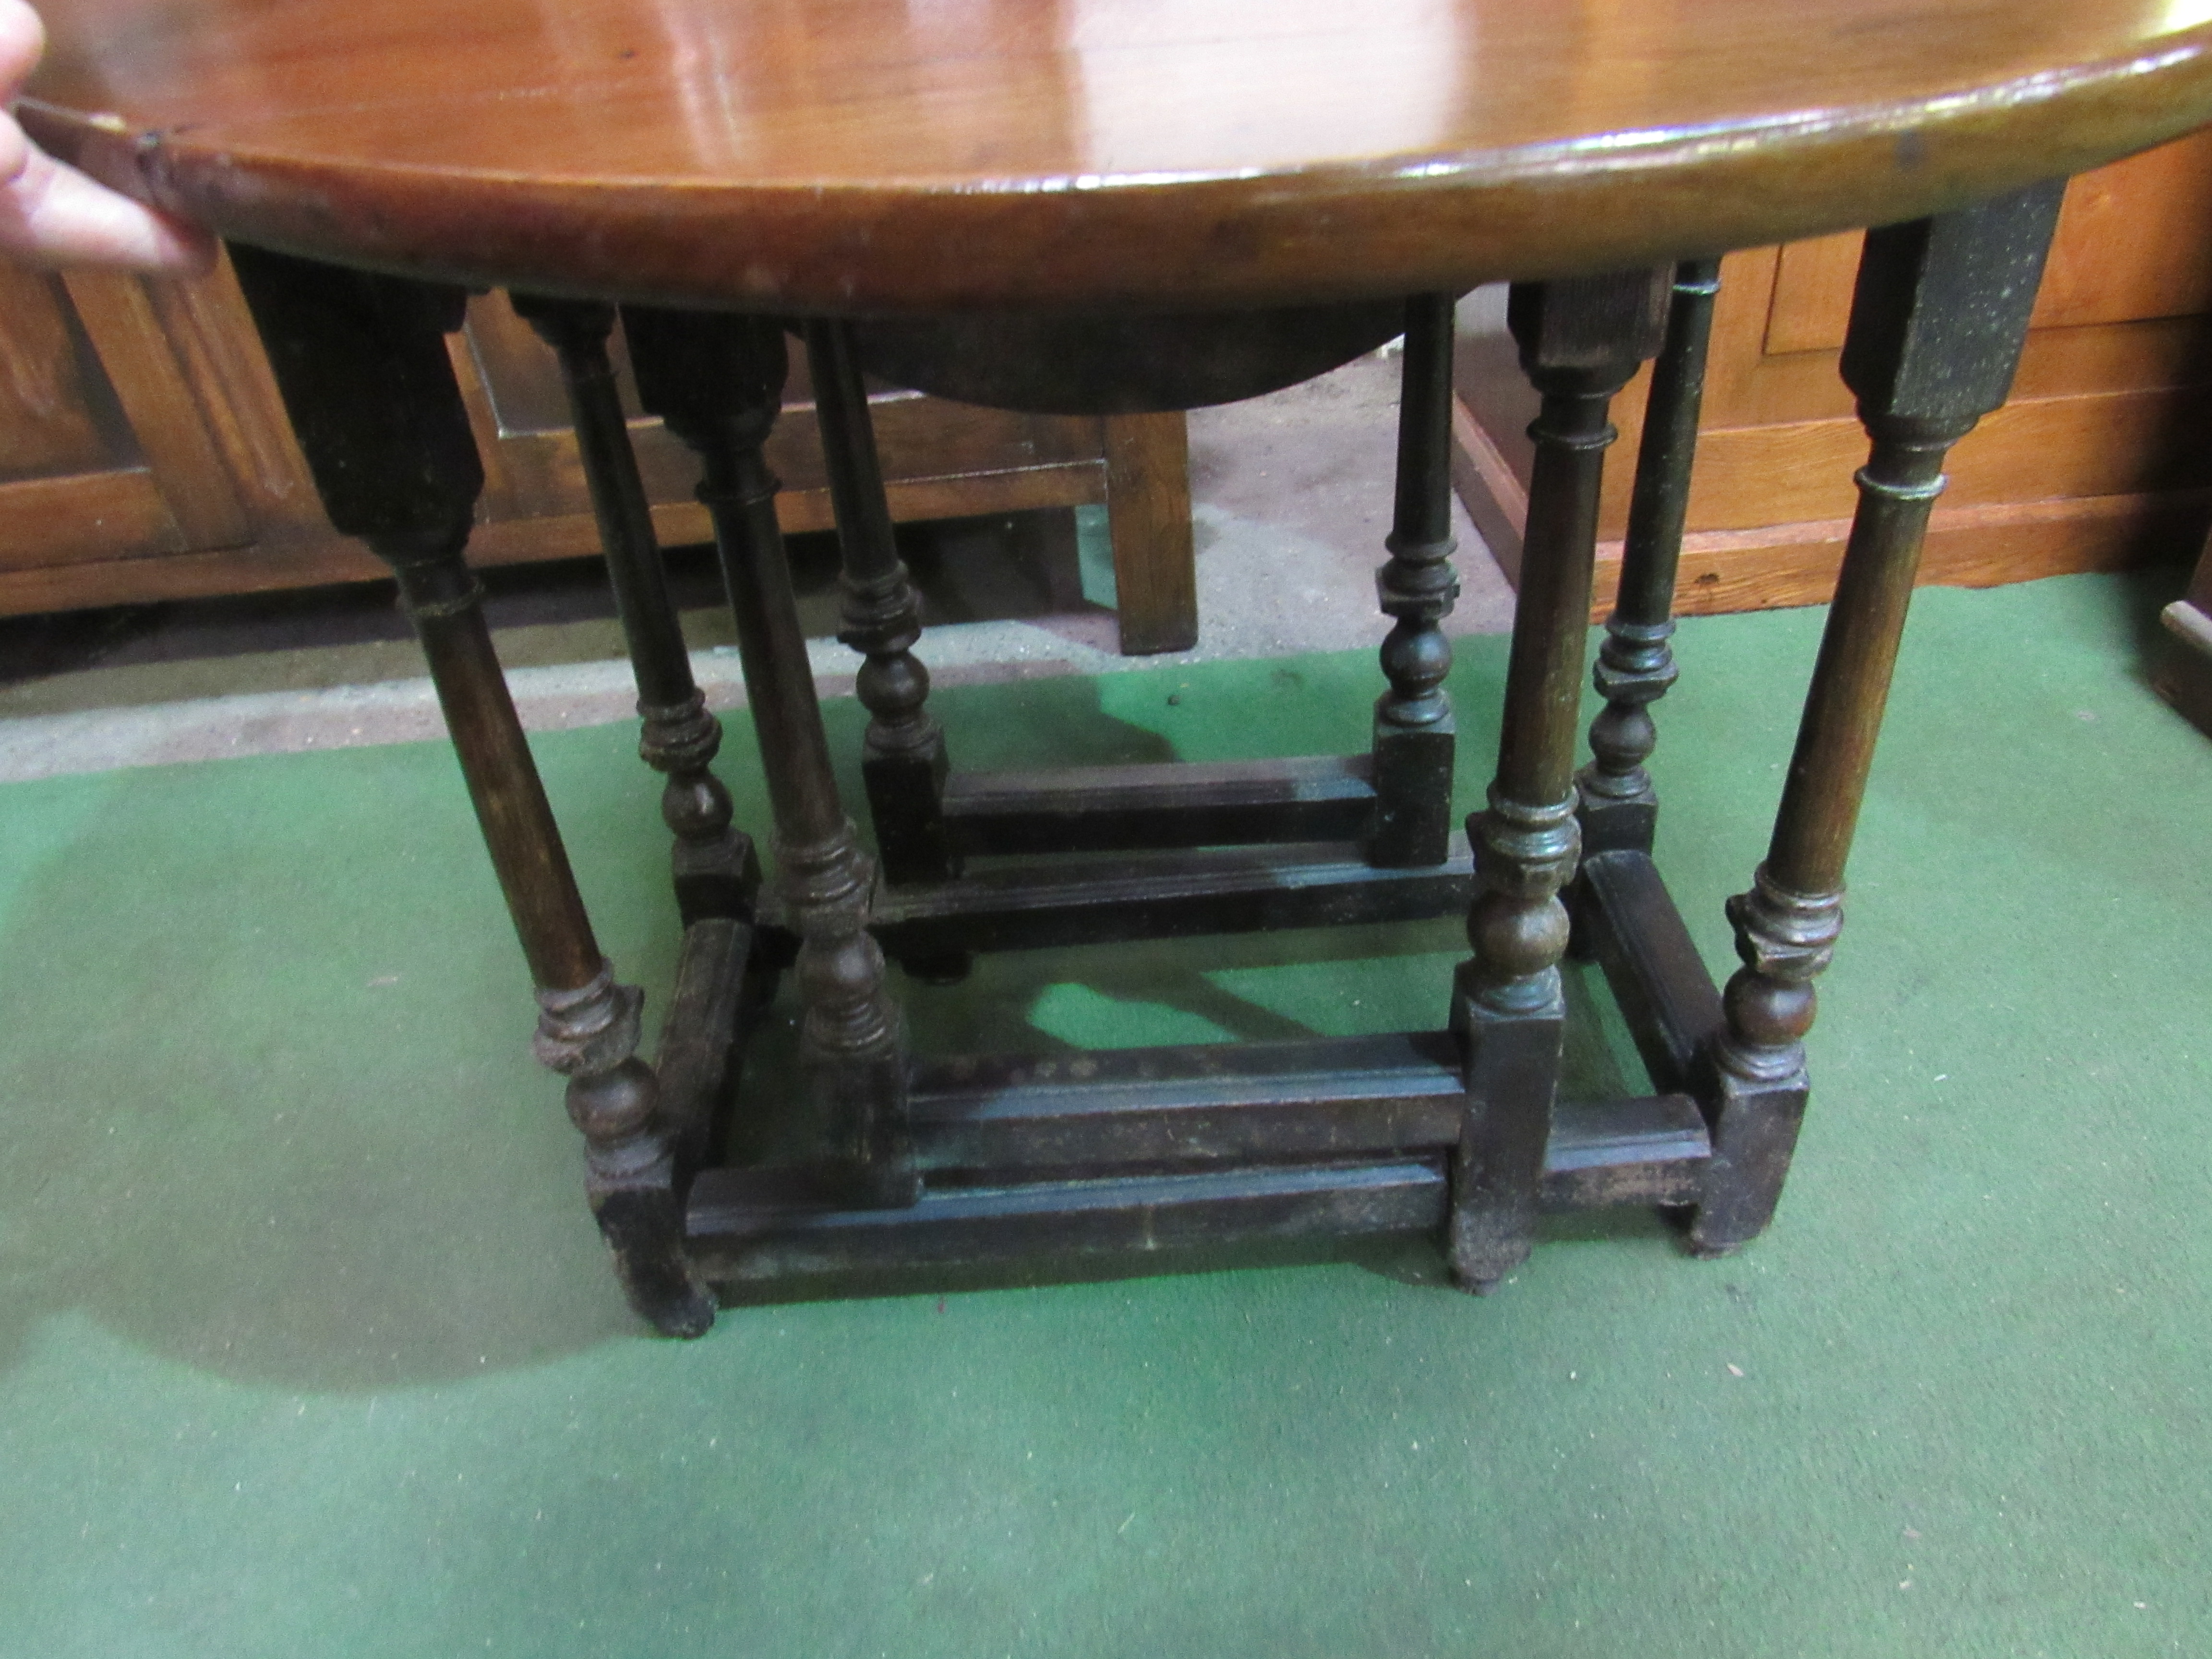 Oak gate leg drop side table, 75 x 92 x 69cms. Estimate £20-30.